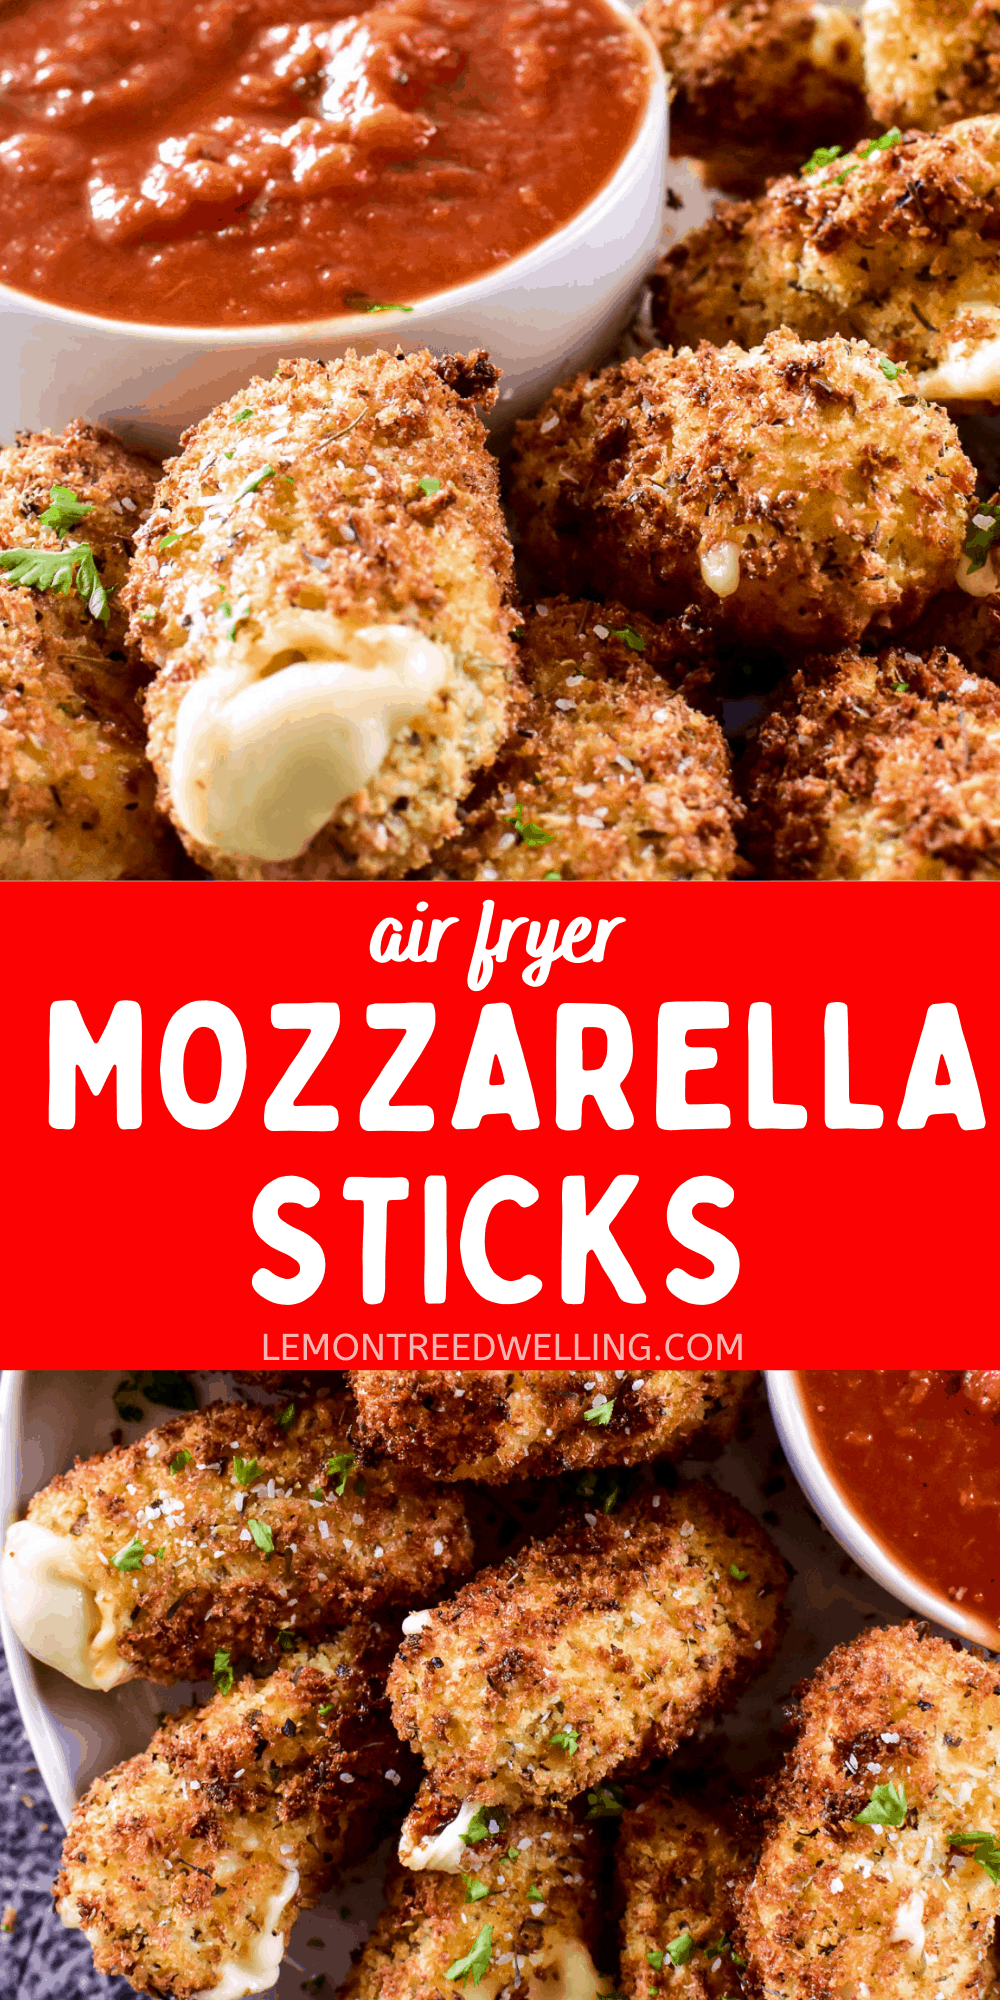 Air Fryer Mozzarella Sticks images with text